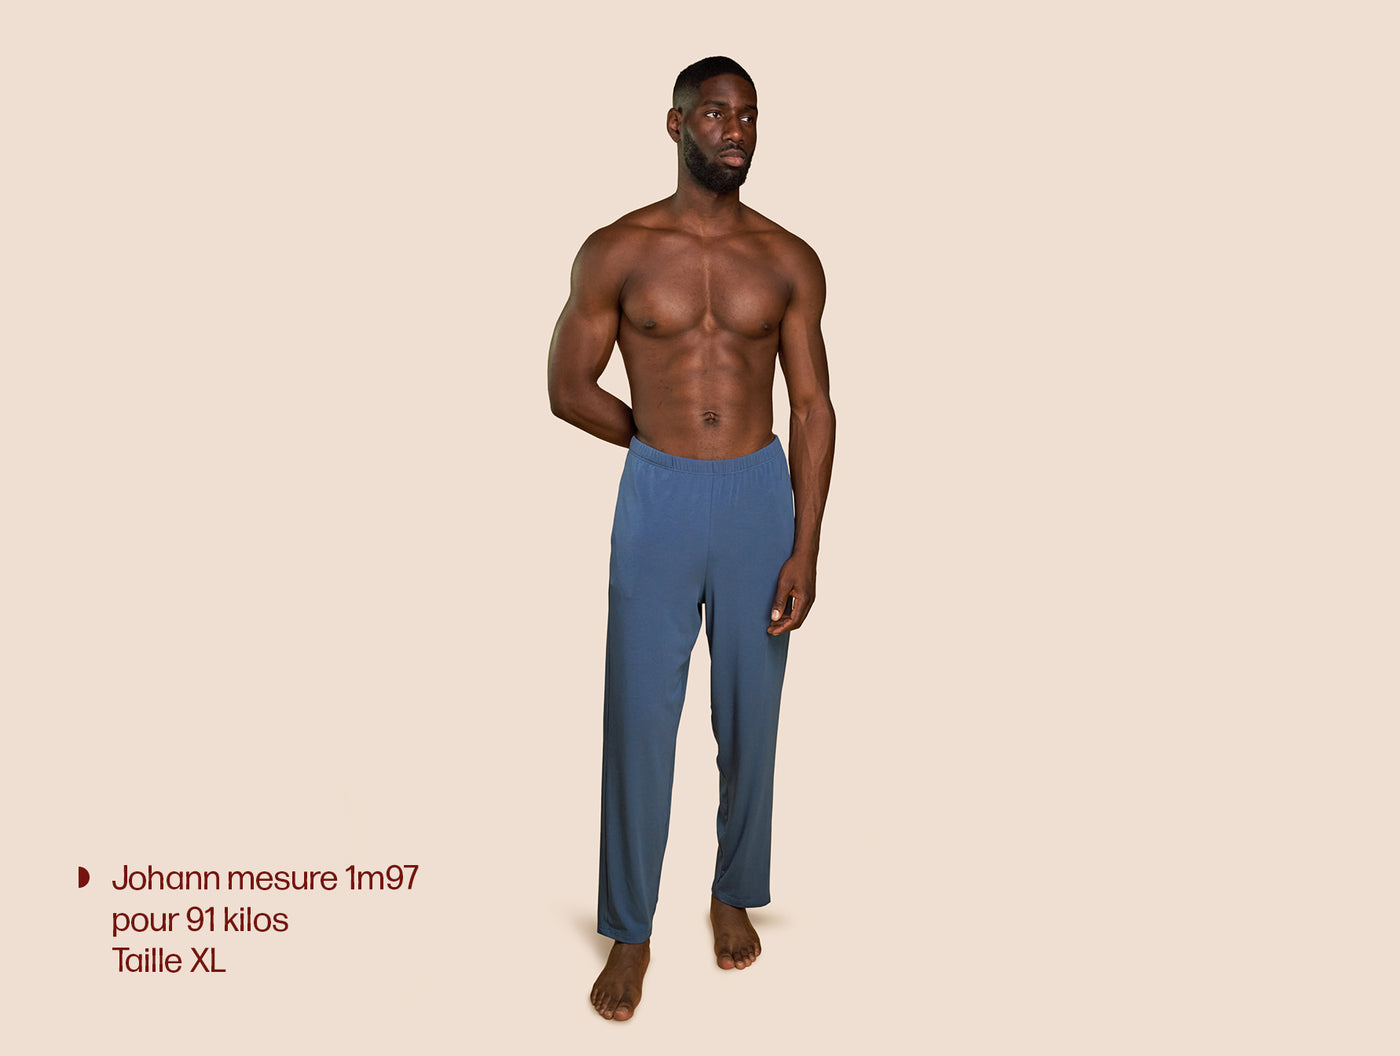 Pétrone pantalon de pyjama coton pima micromodal bleu céruléen homme#couleur_bleu-céruléen